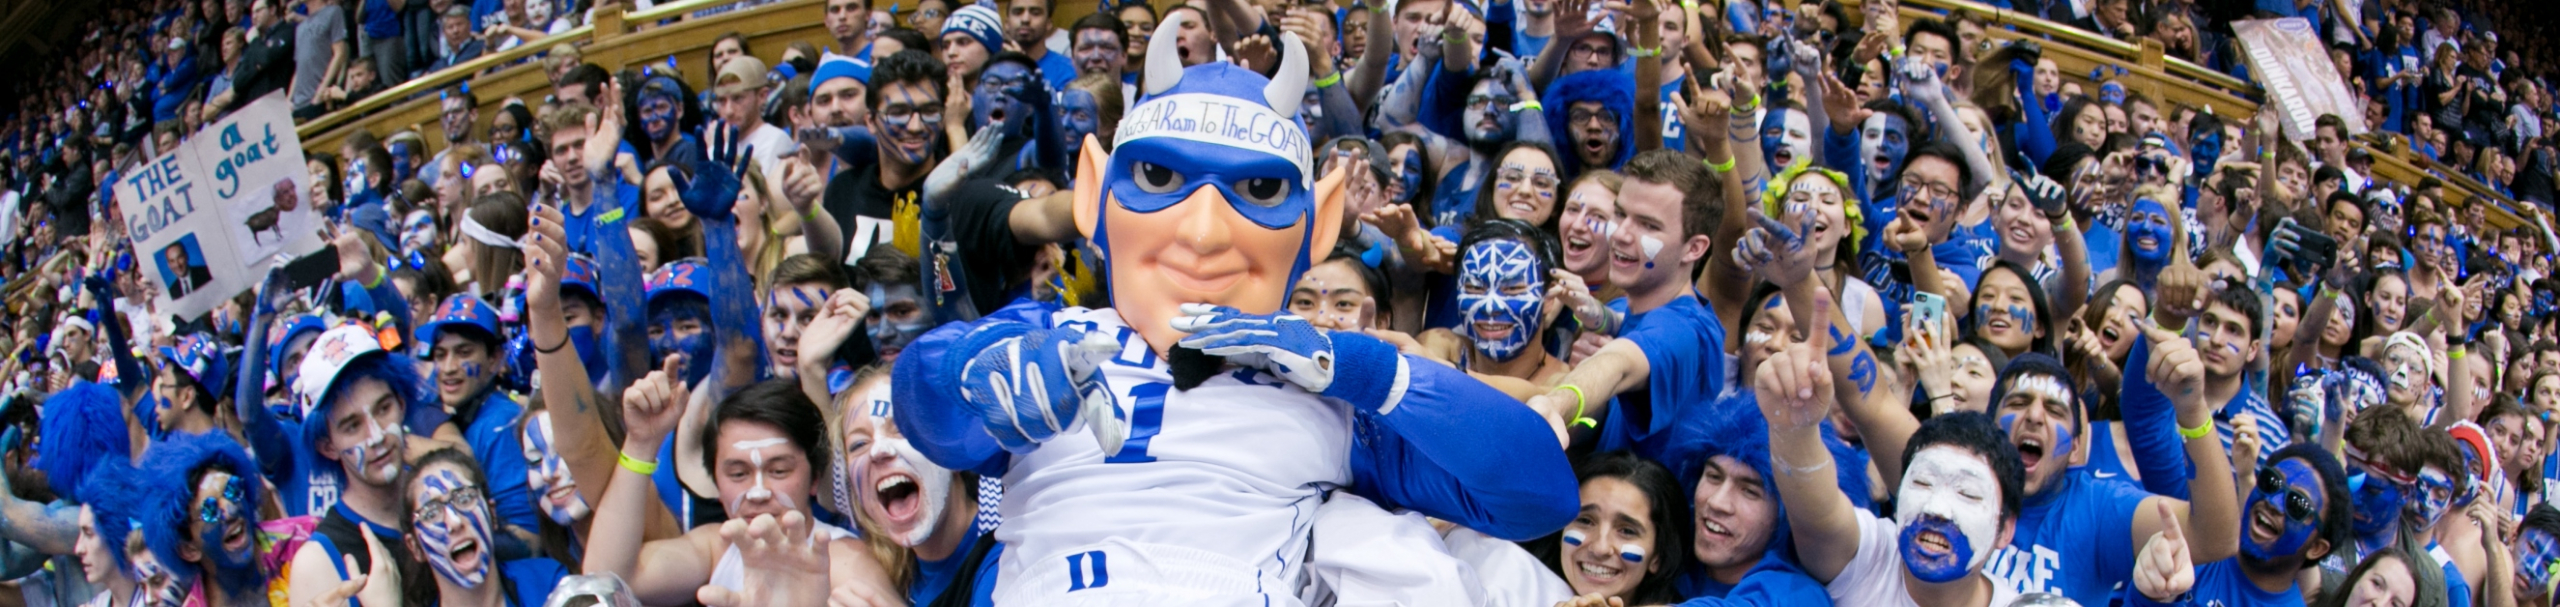 The Duke Blue Devil mascot with cheering fans at Duke University